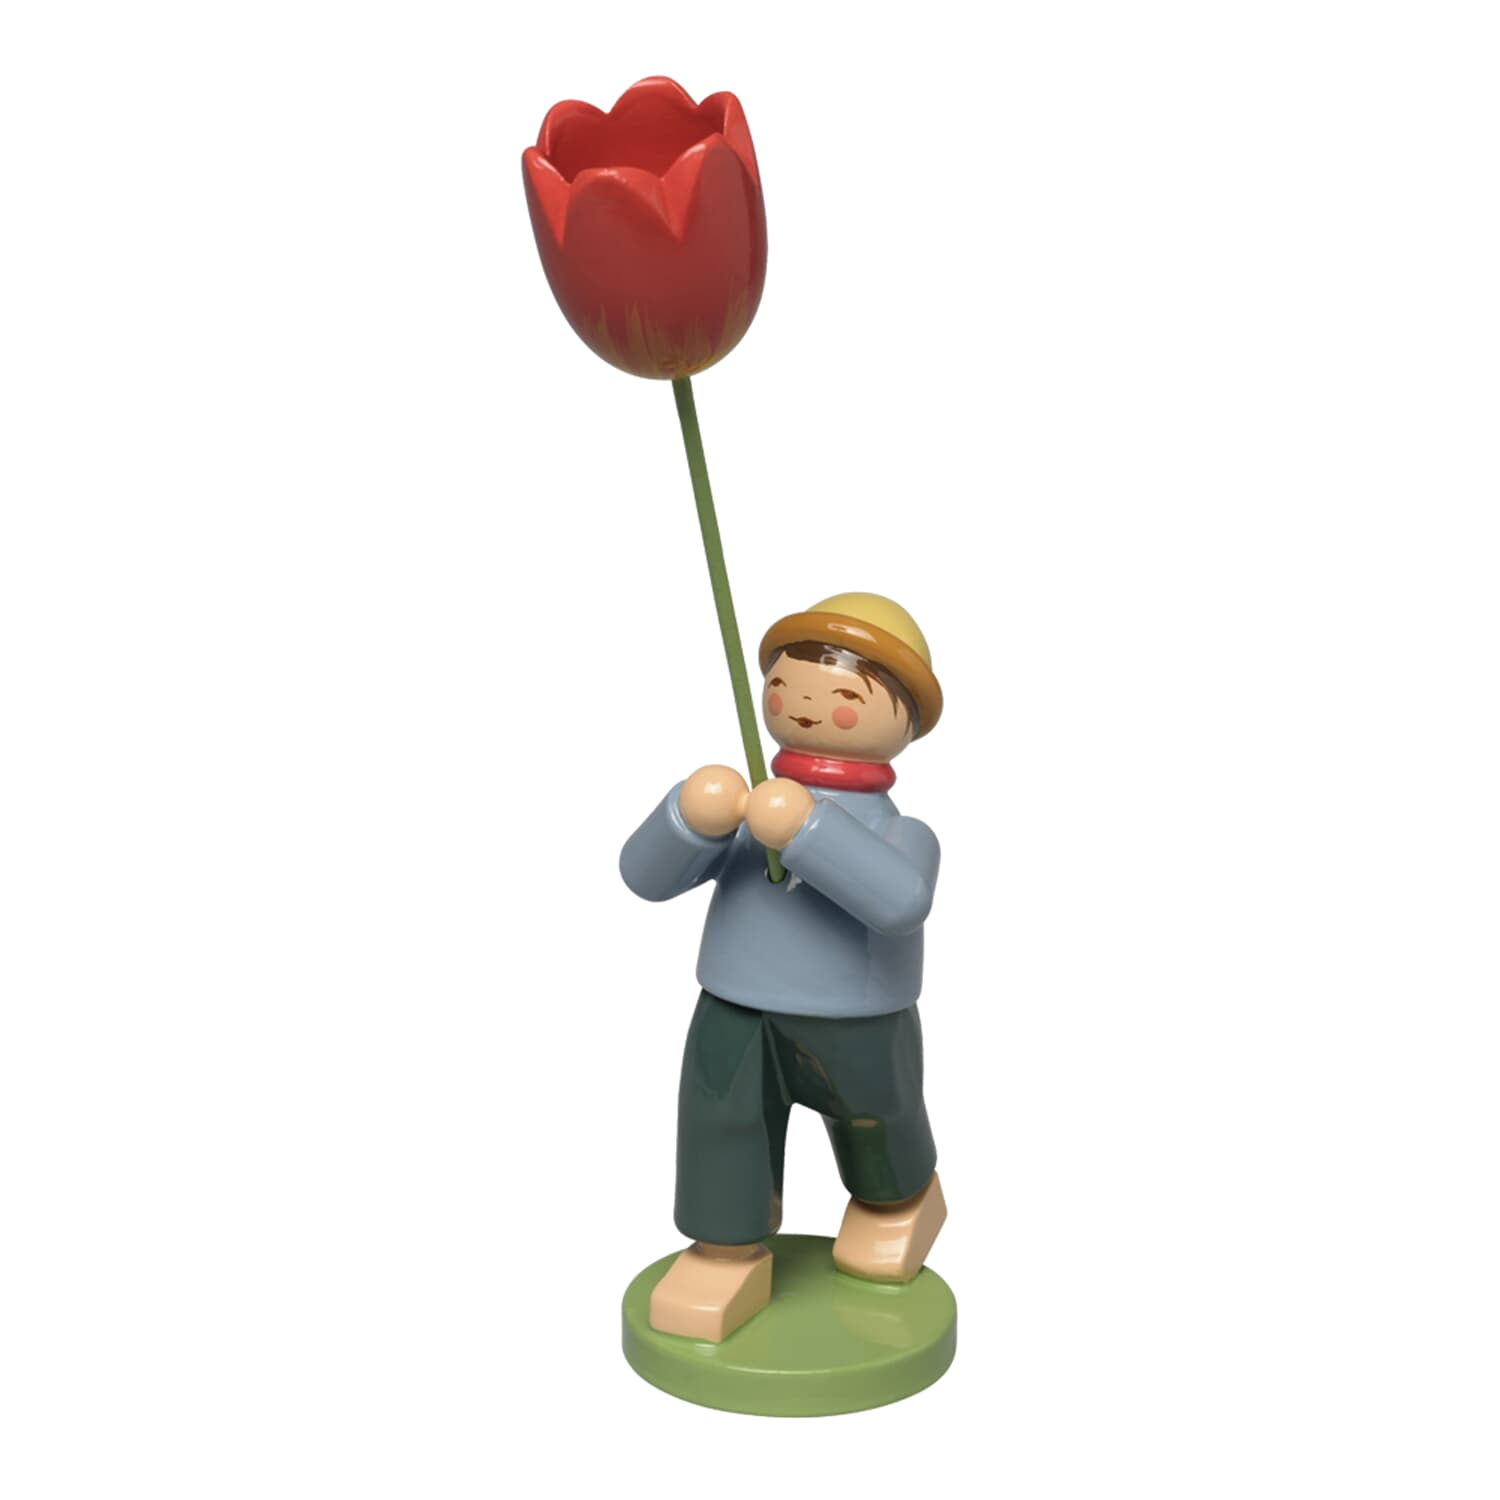 Boy with tulip